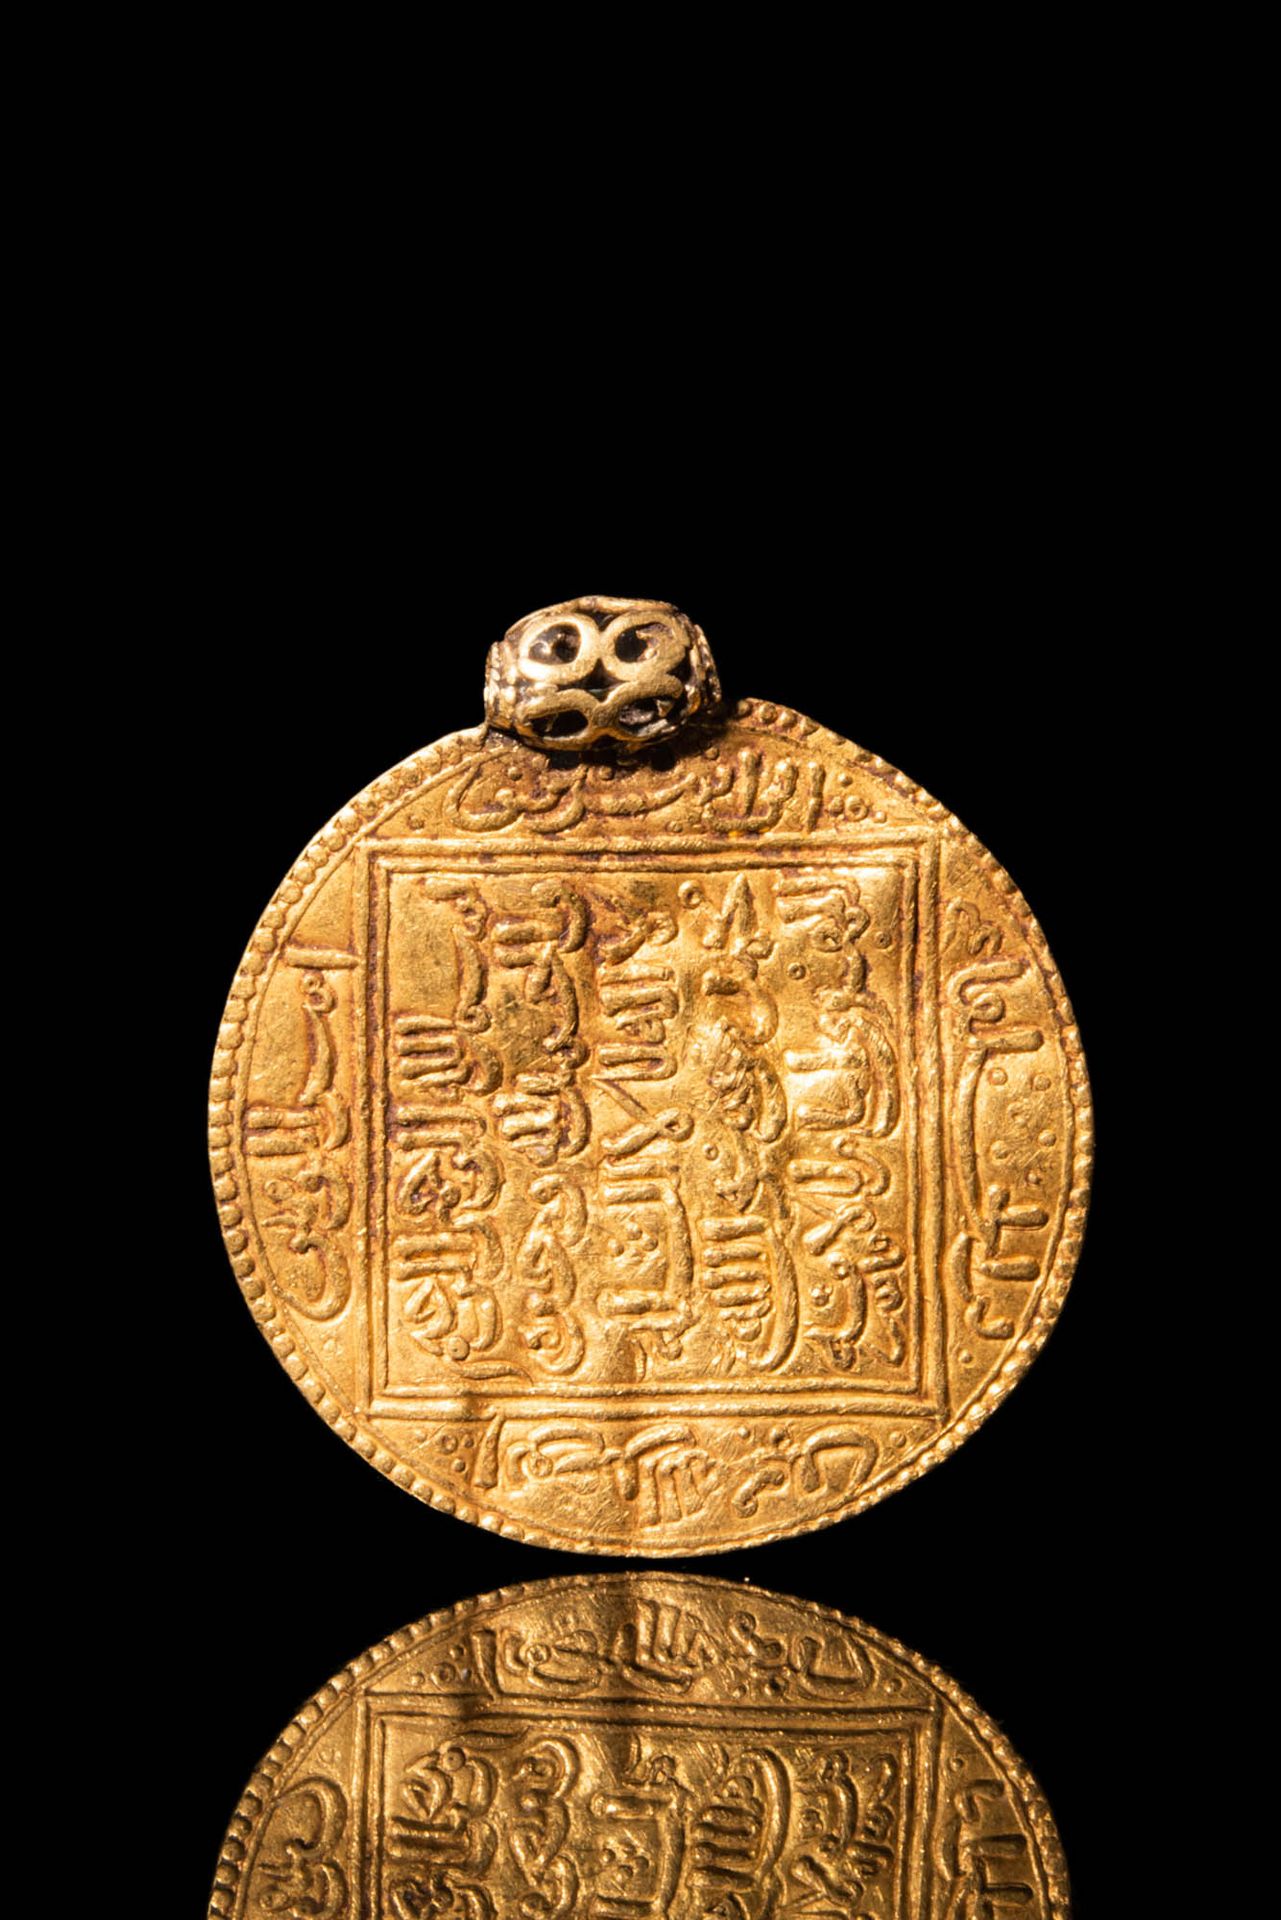 ISLAMIC GOLD ROUND COIN PENDANT Ca. AD 1100 - 1200.
Pendentif islamique en or de&hellip;